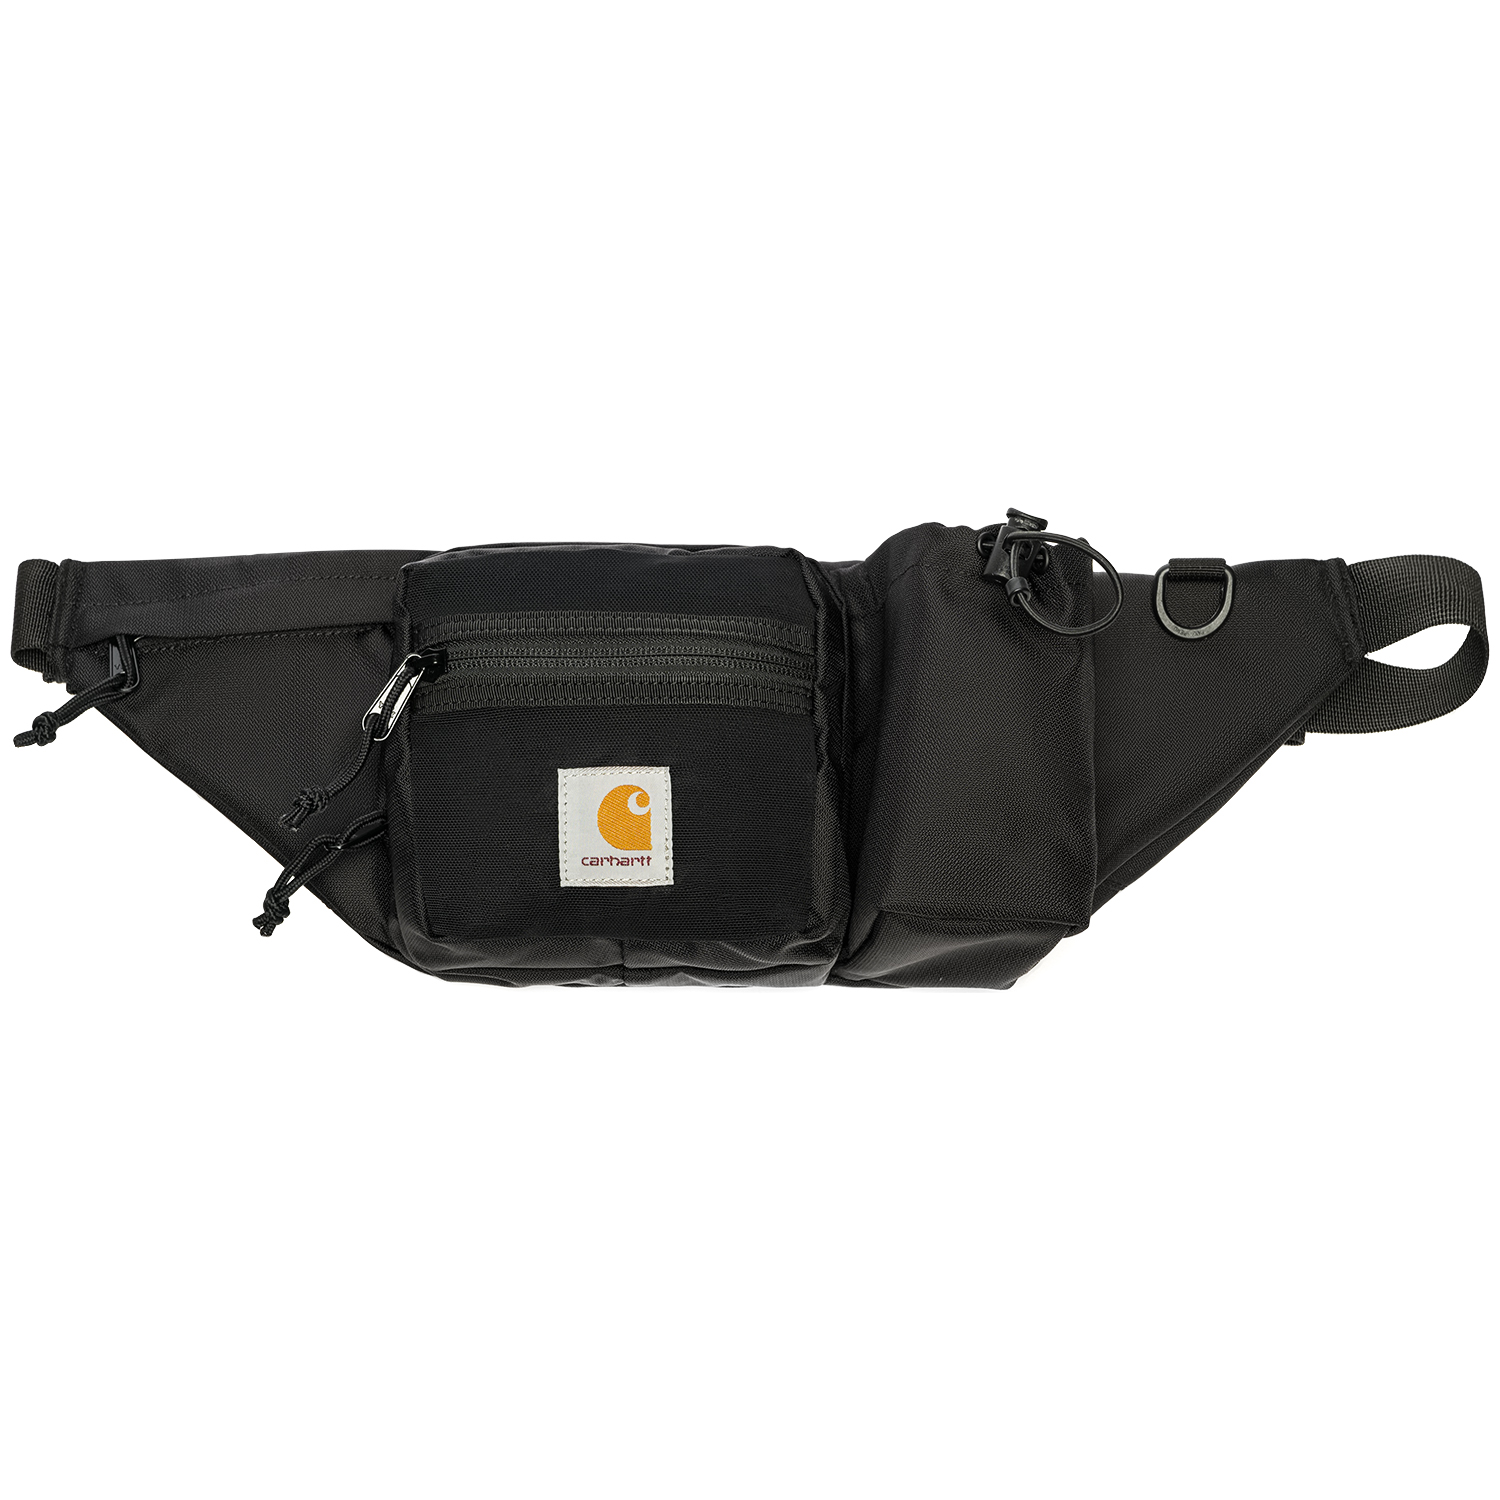 Carhartt WIP Delta Hip Bag in Black